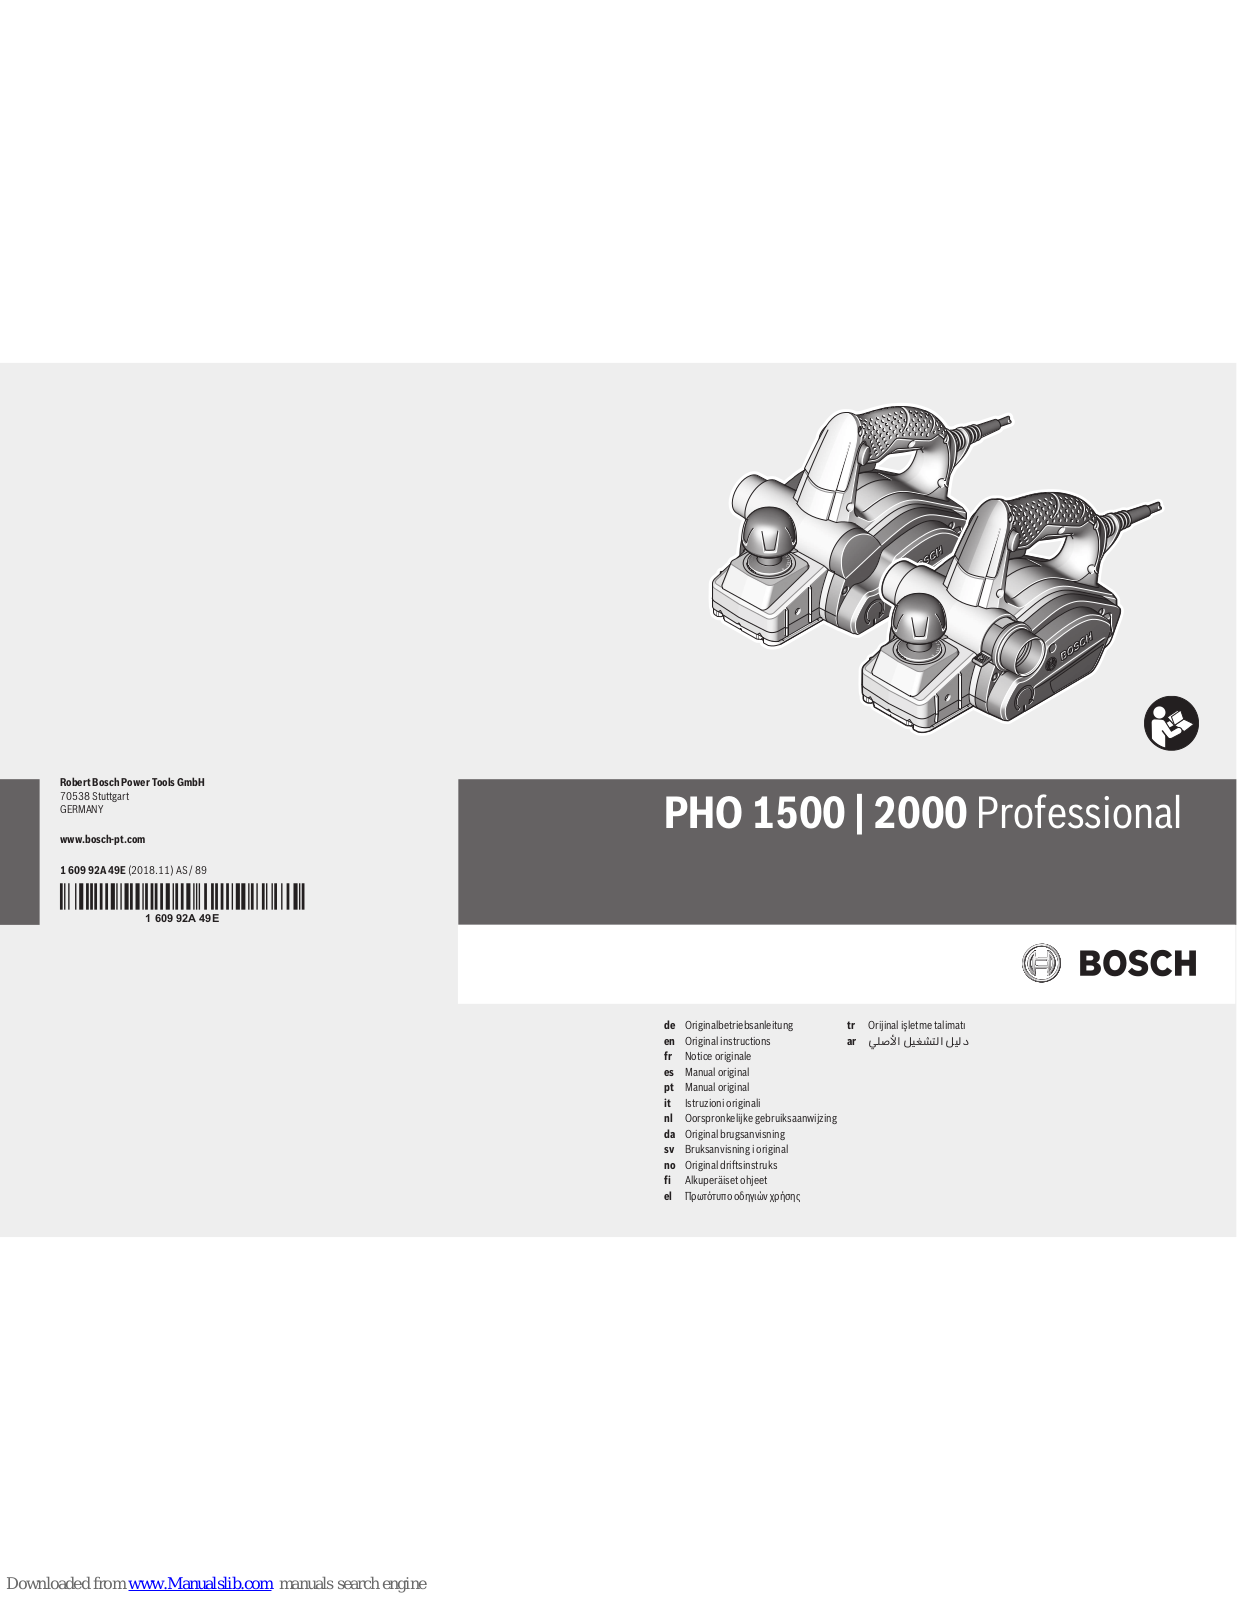 Bosch PHO 1500 Professional, PHO 2000 Professional Original Instructions Manual